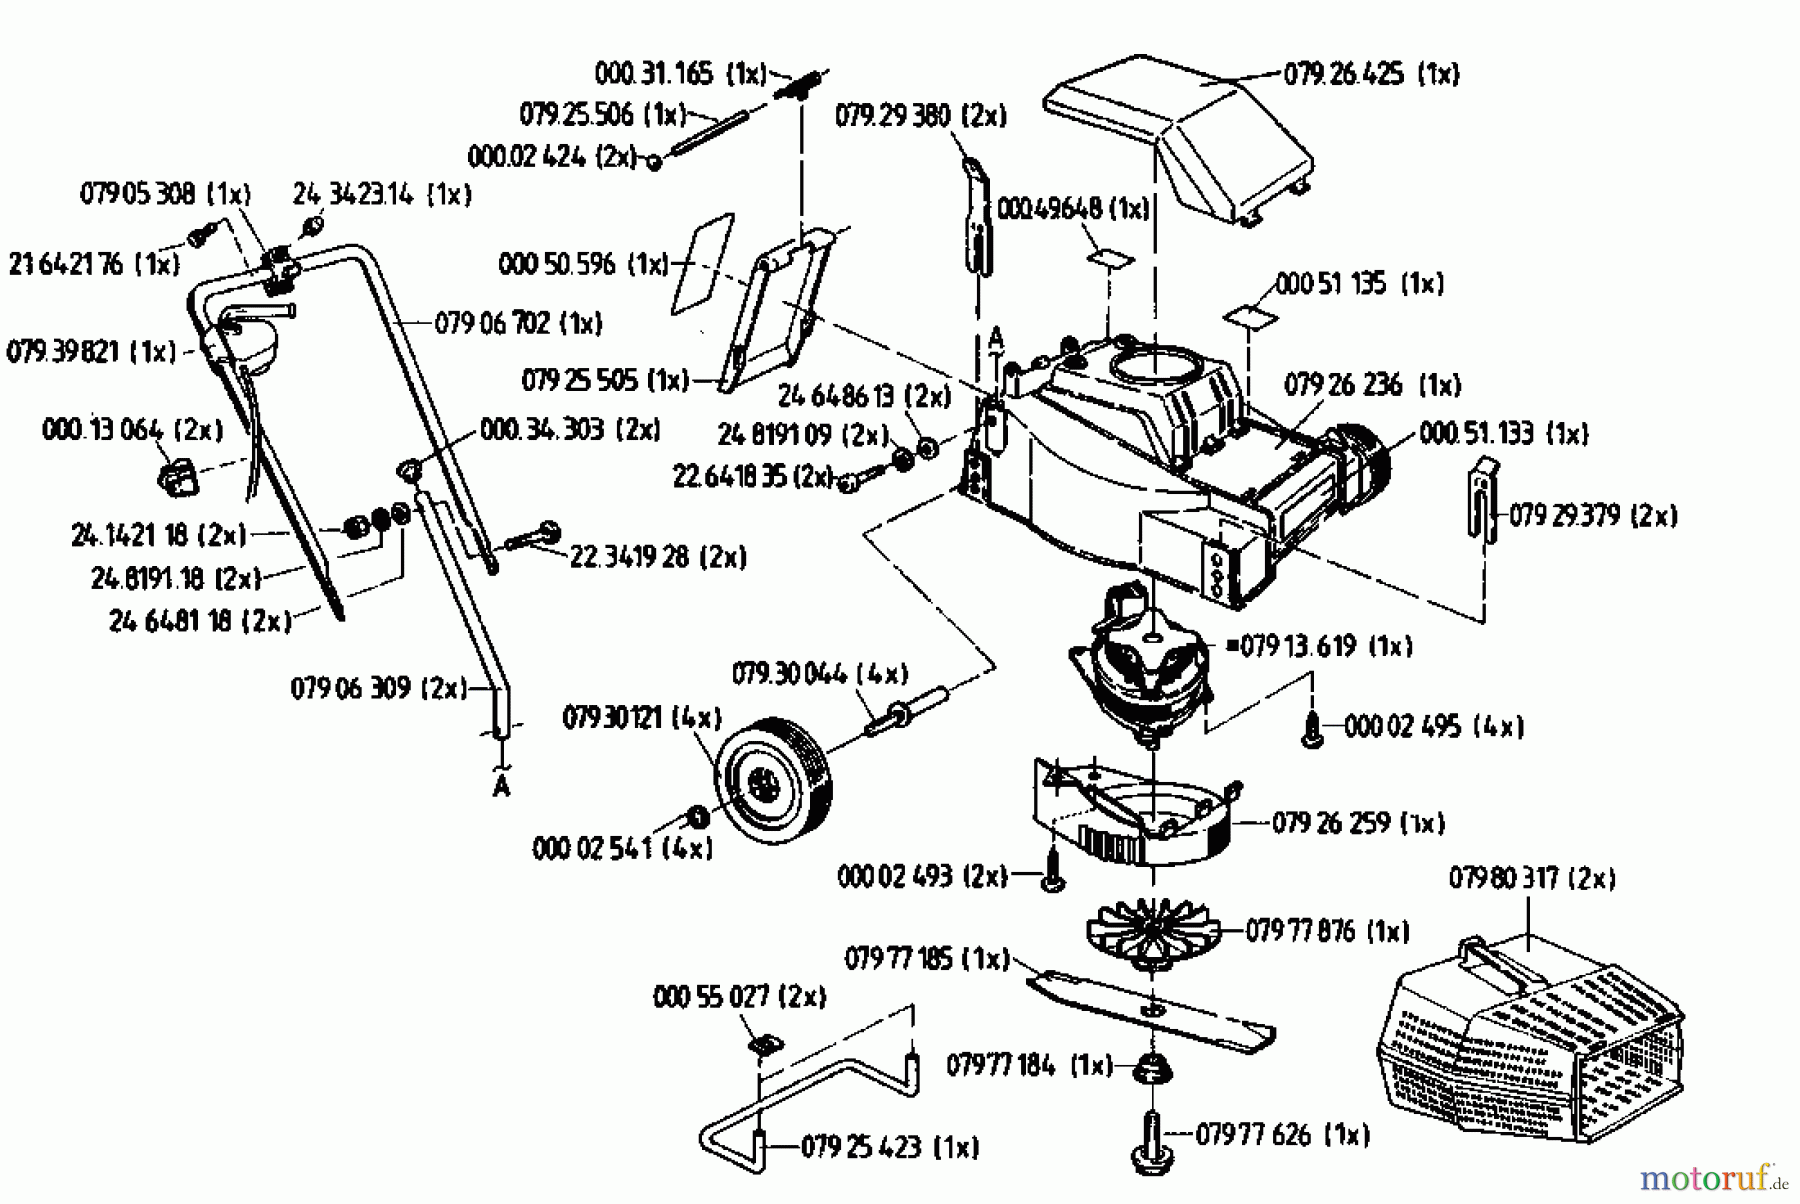  Golf Electric mower E 732 02819.01  (1993) Basic machine